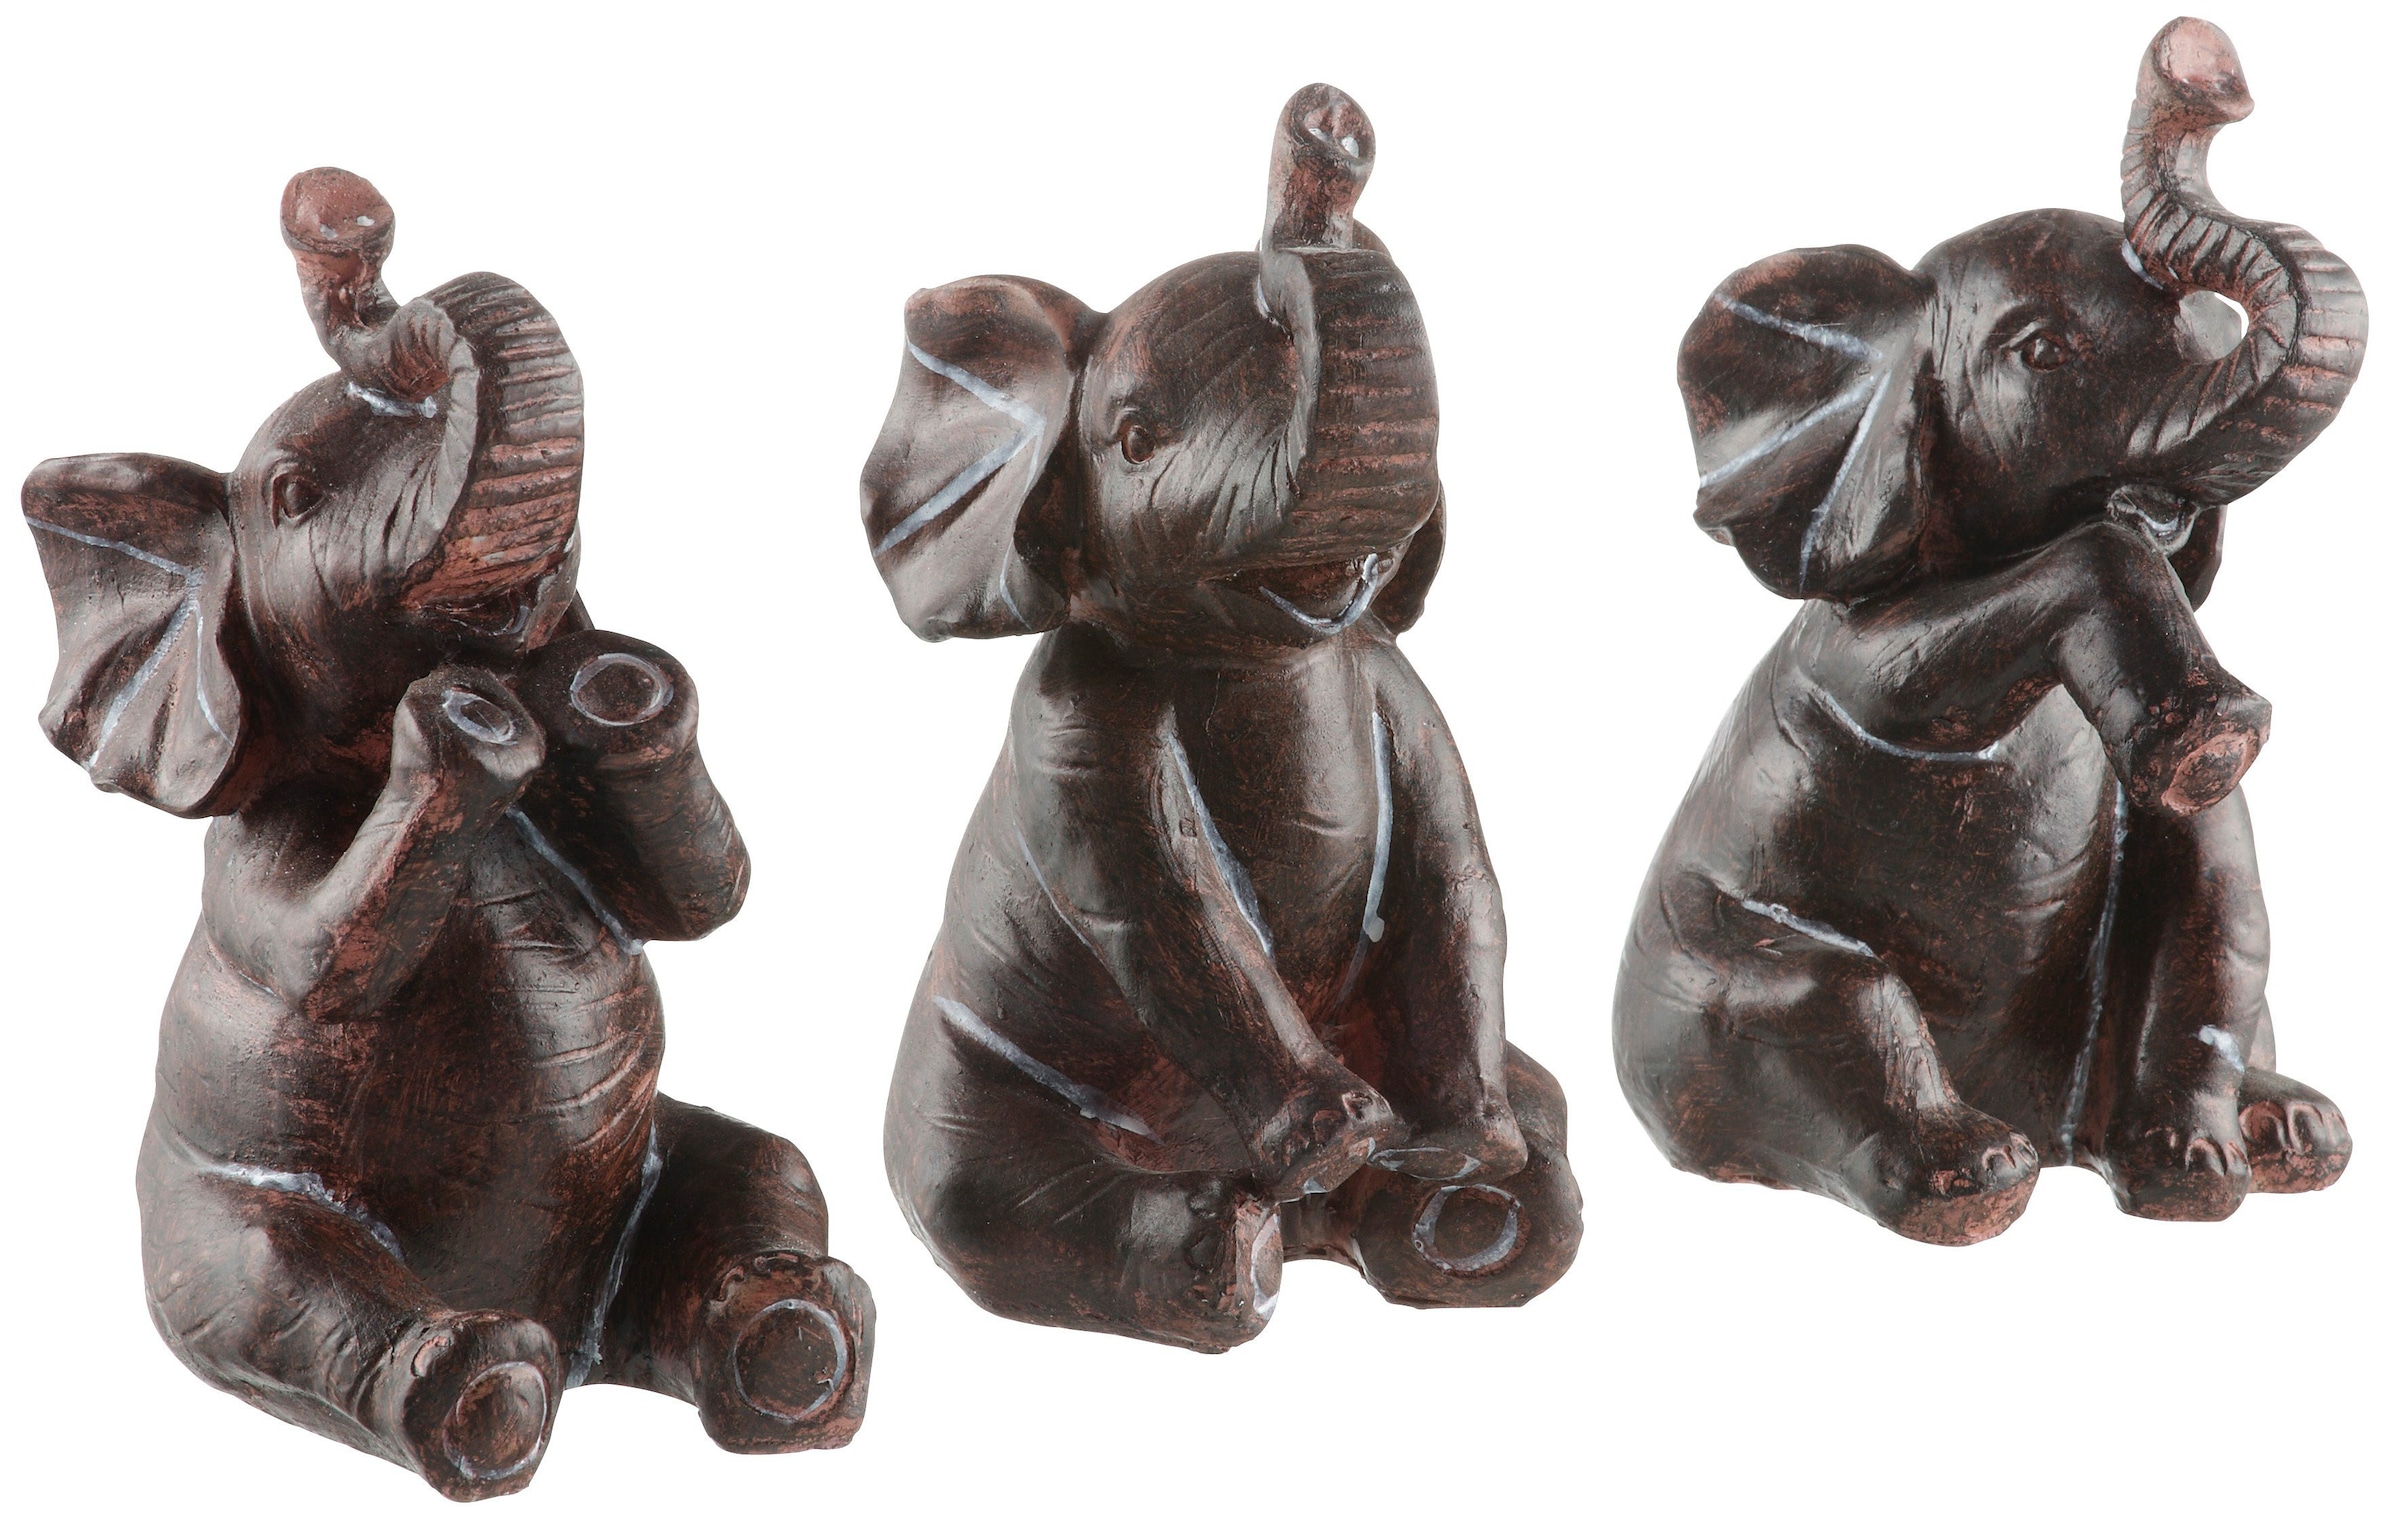 pajoma Tierfigur »Elefanten«, (Set, 3 Raten auf St.) bestellen